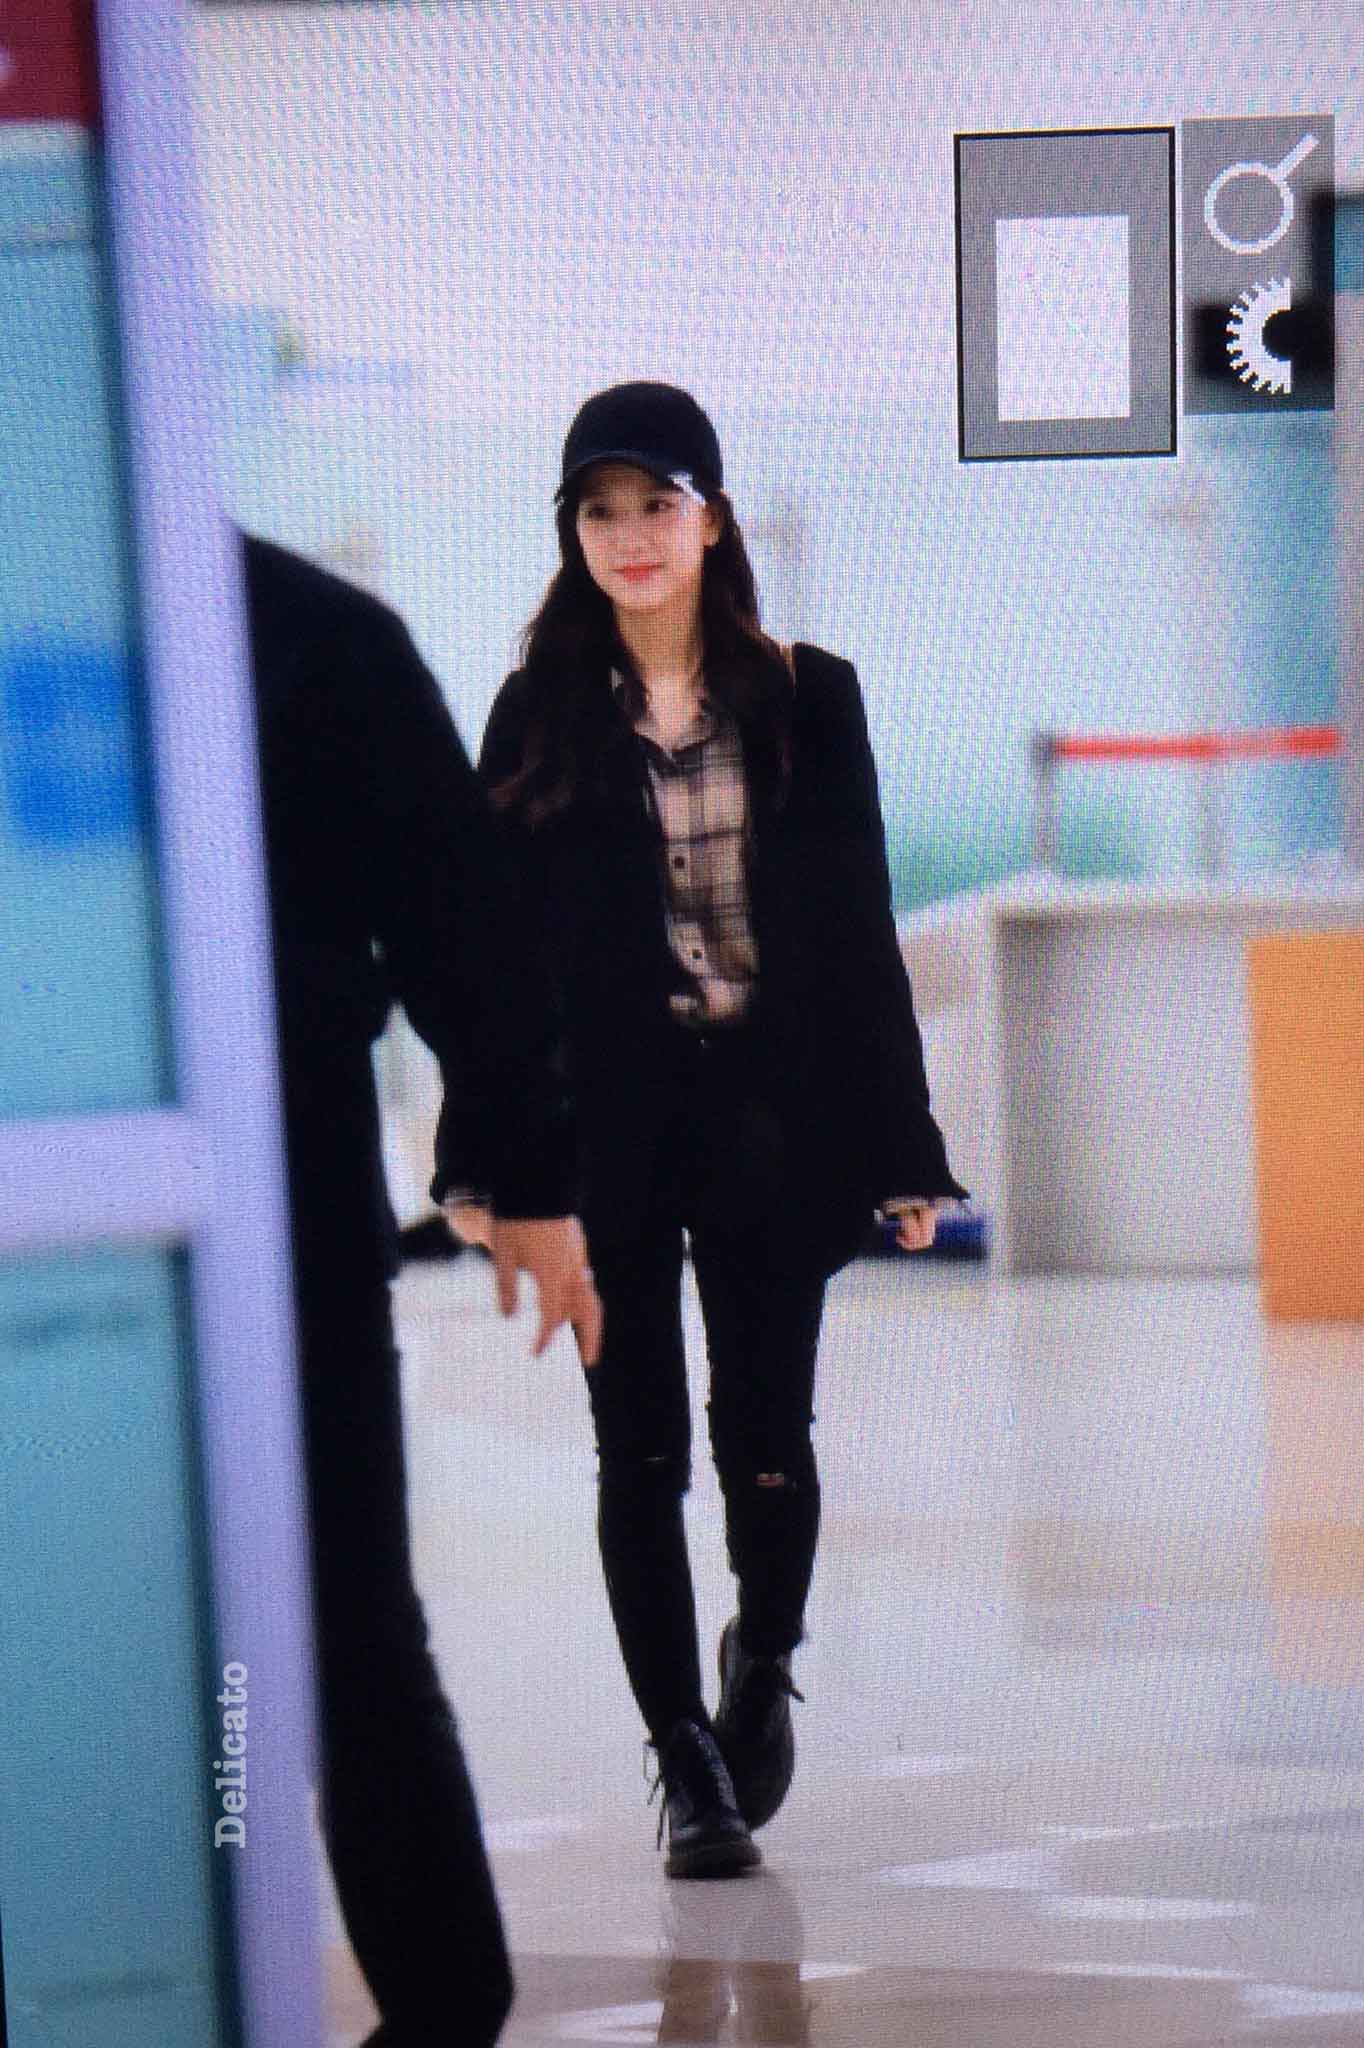 Blackpink Jisoo airport fashion black outfit wear cap hat